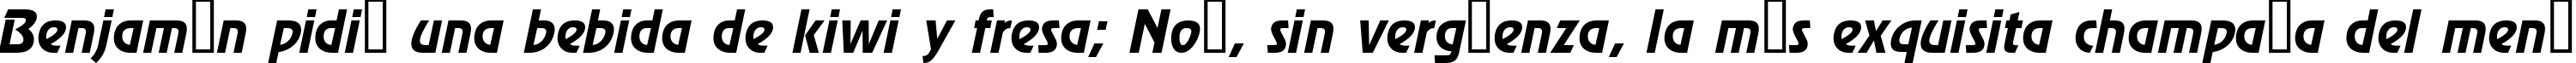 Пример написания шрифтом a_RewinderDemi Italic текста на испанском